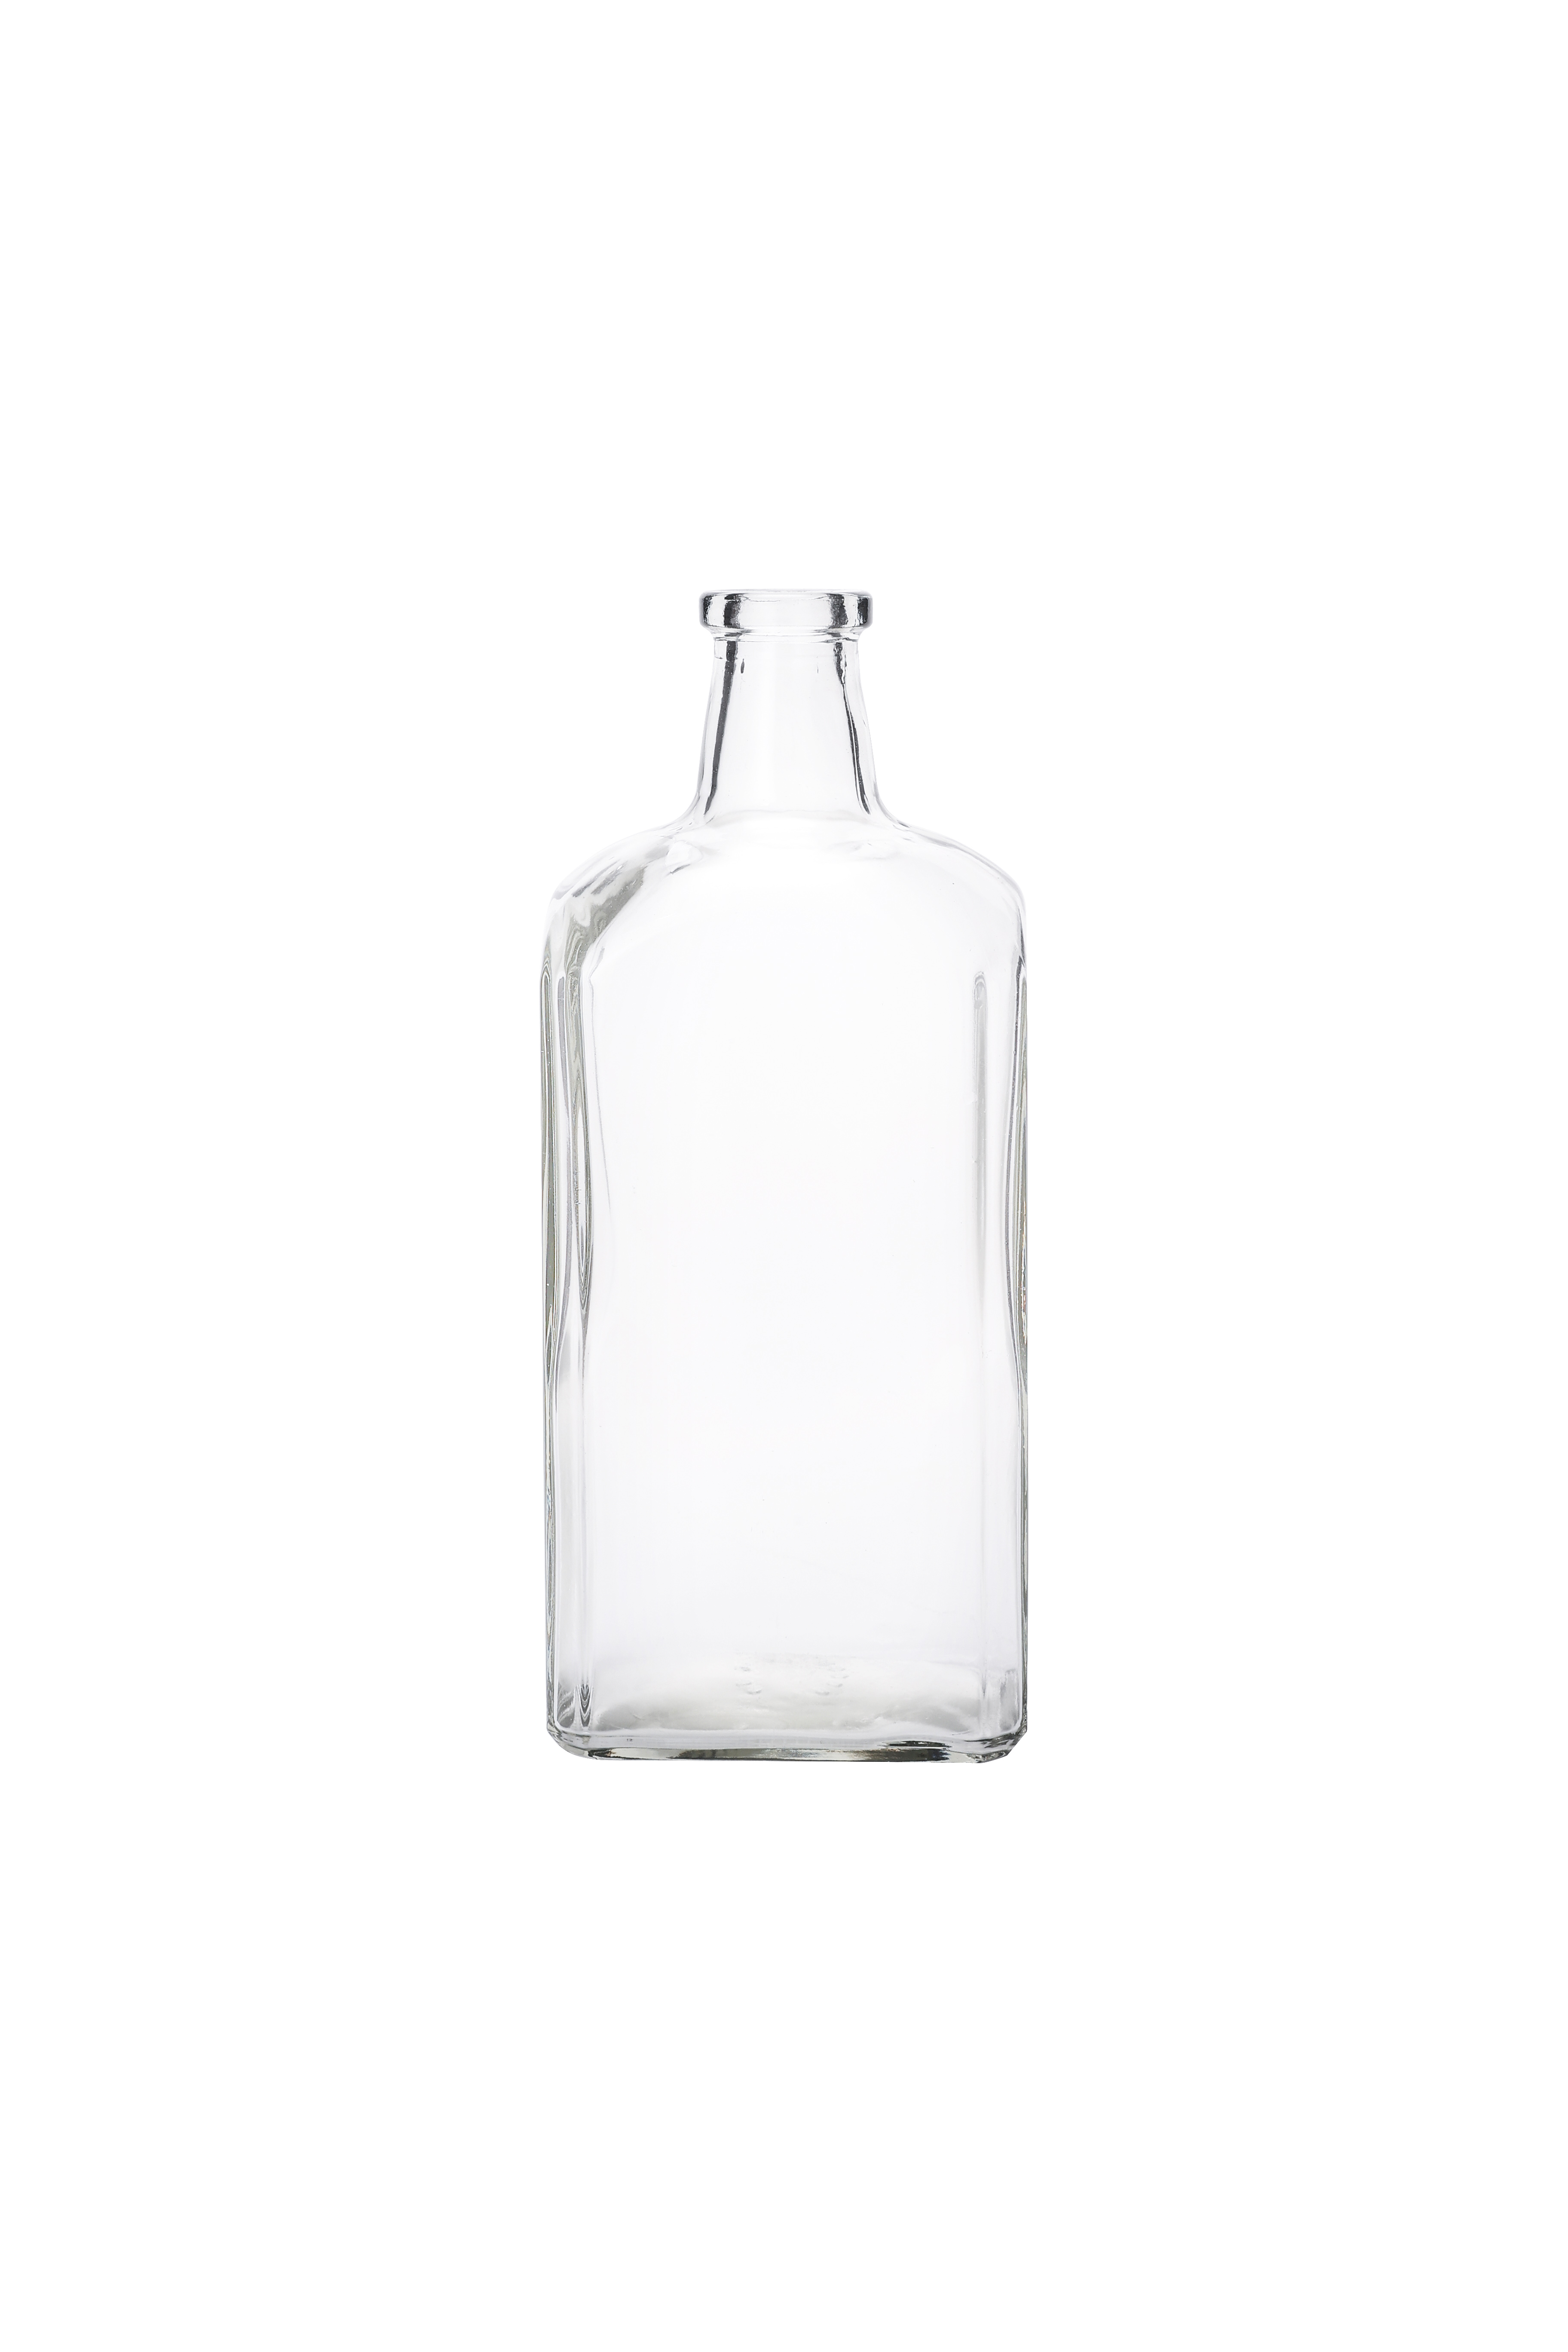 50ml 100ml Wholesale Empty Mini Liquor Glass Bottles With Aluminum Cap For Liquor Wine Alcohol